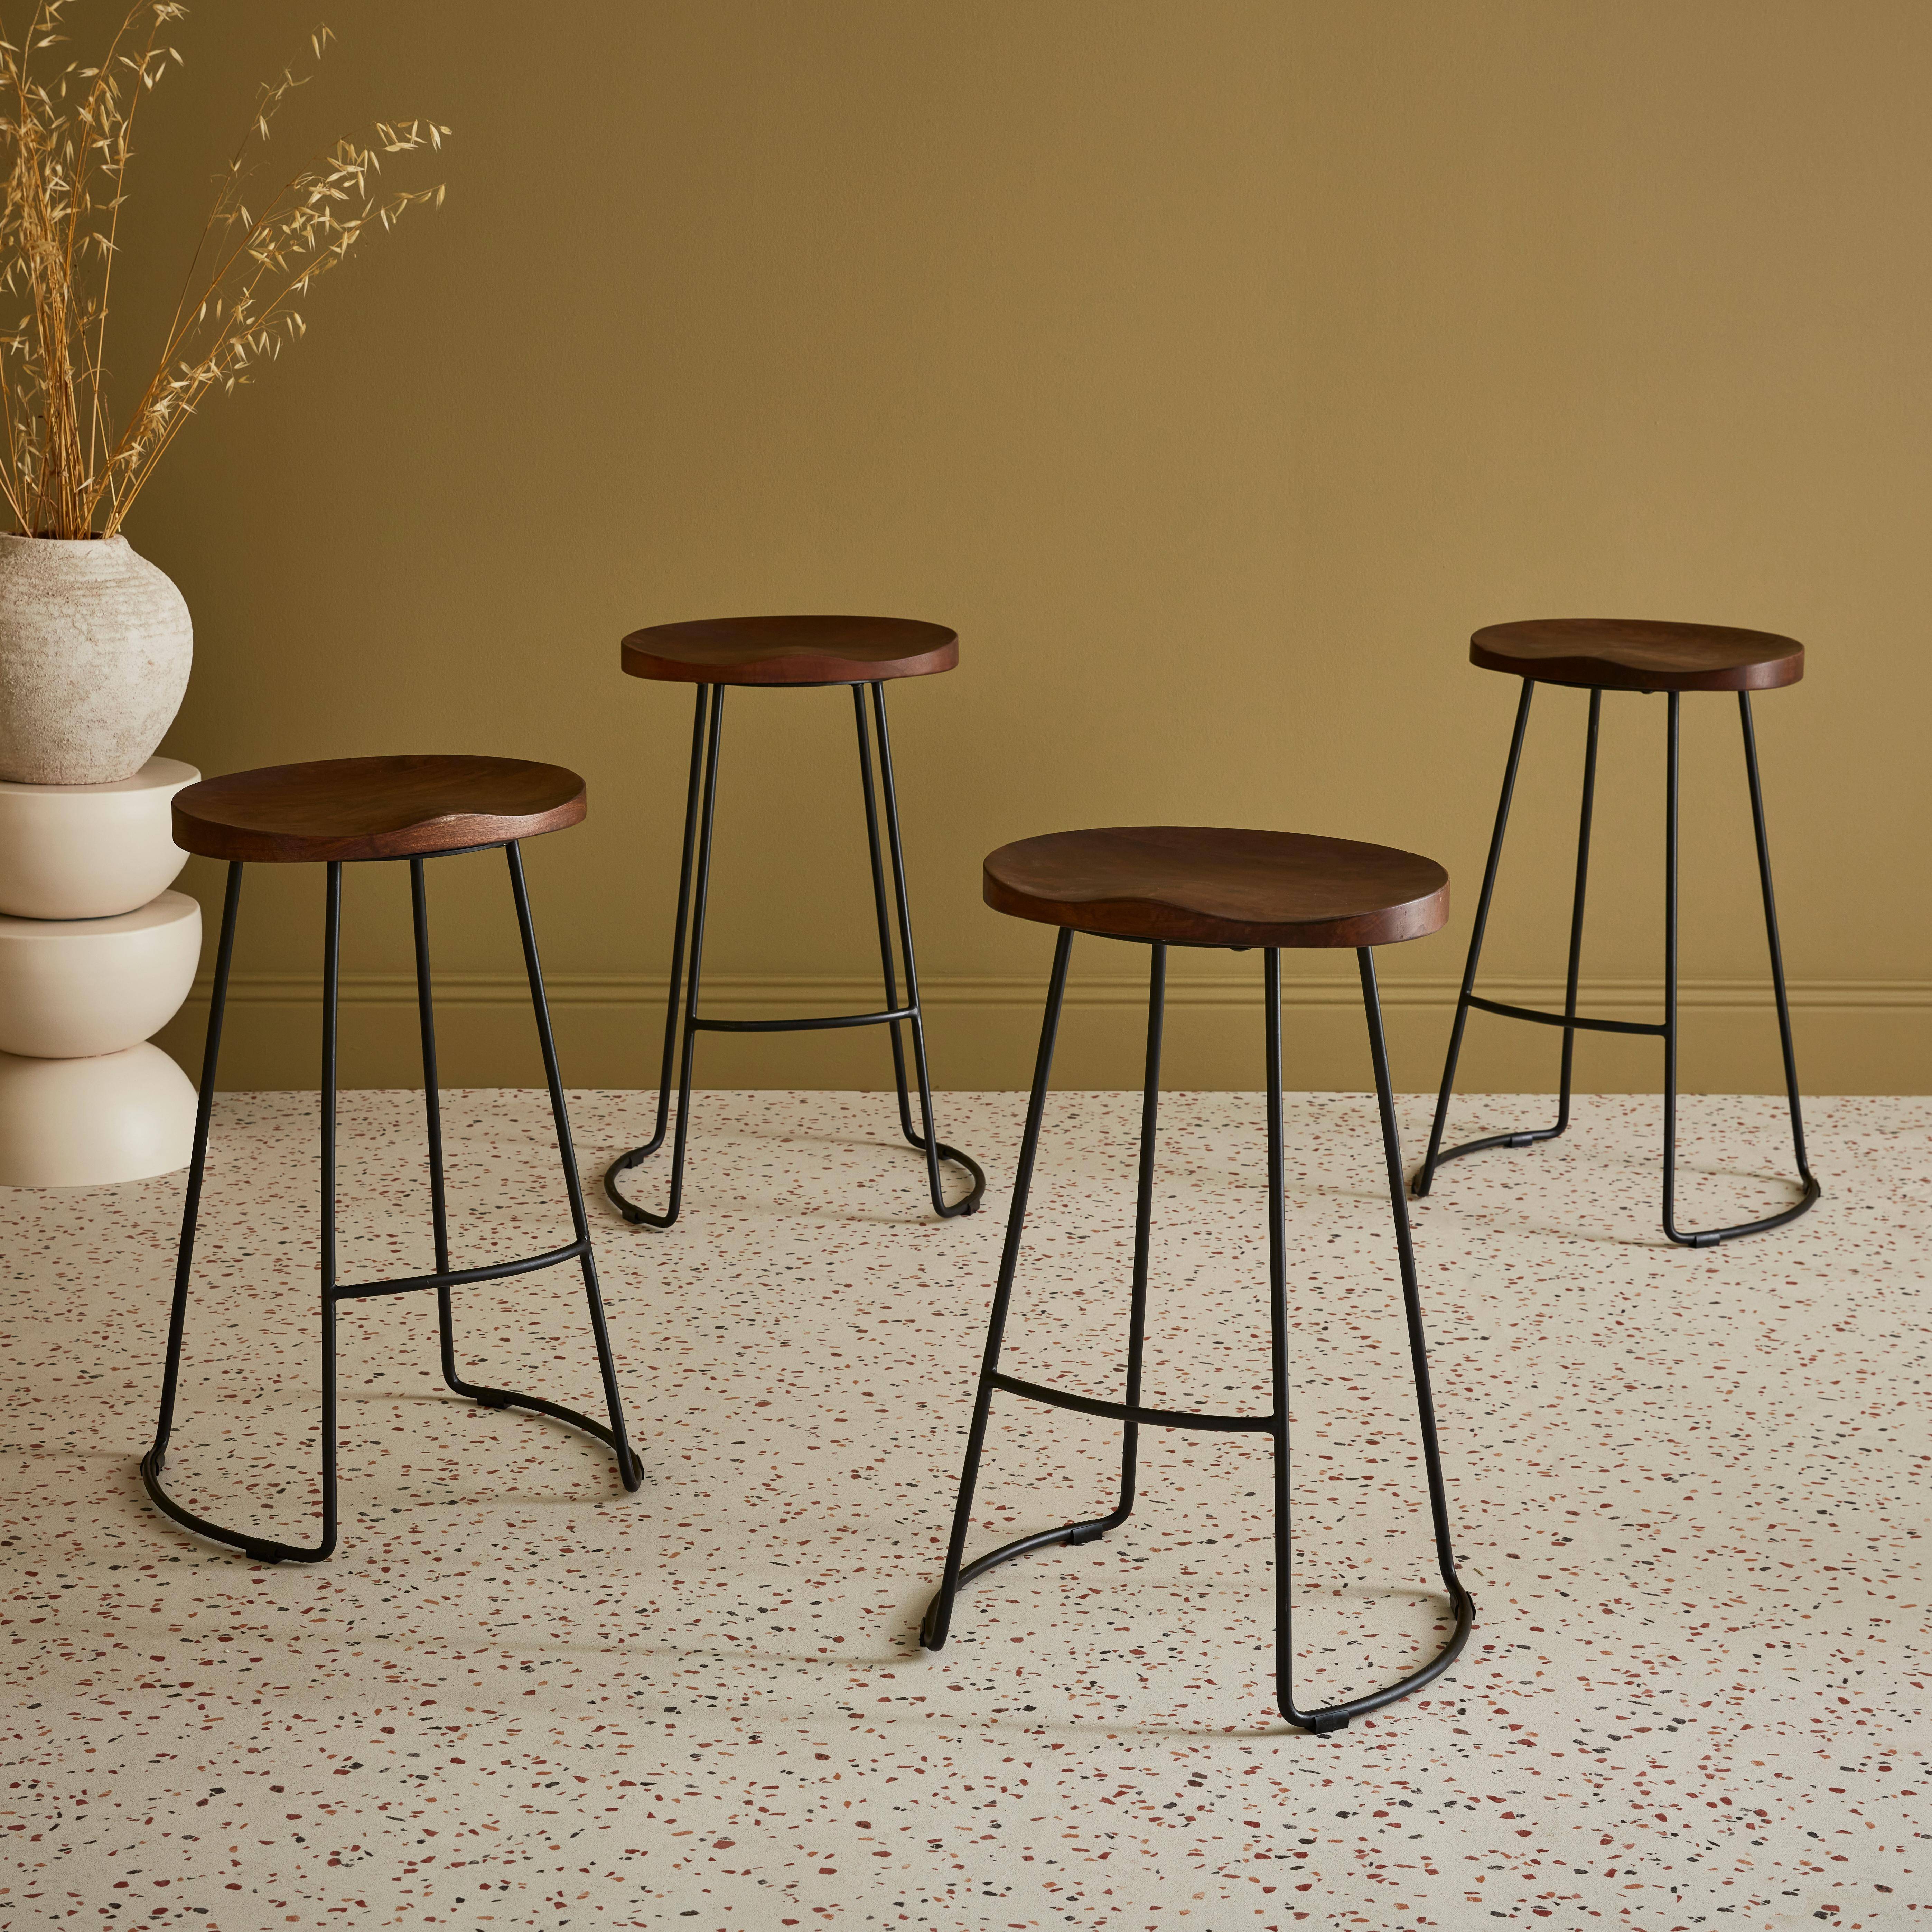 Set of 4 industrial metal and wooden bar stools, 44x36x65cm, Jaya, Light Walnut, Mango wood seat, black metal legs Photo1